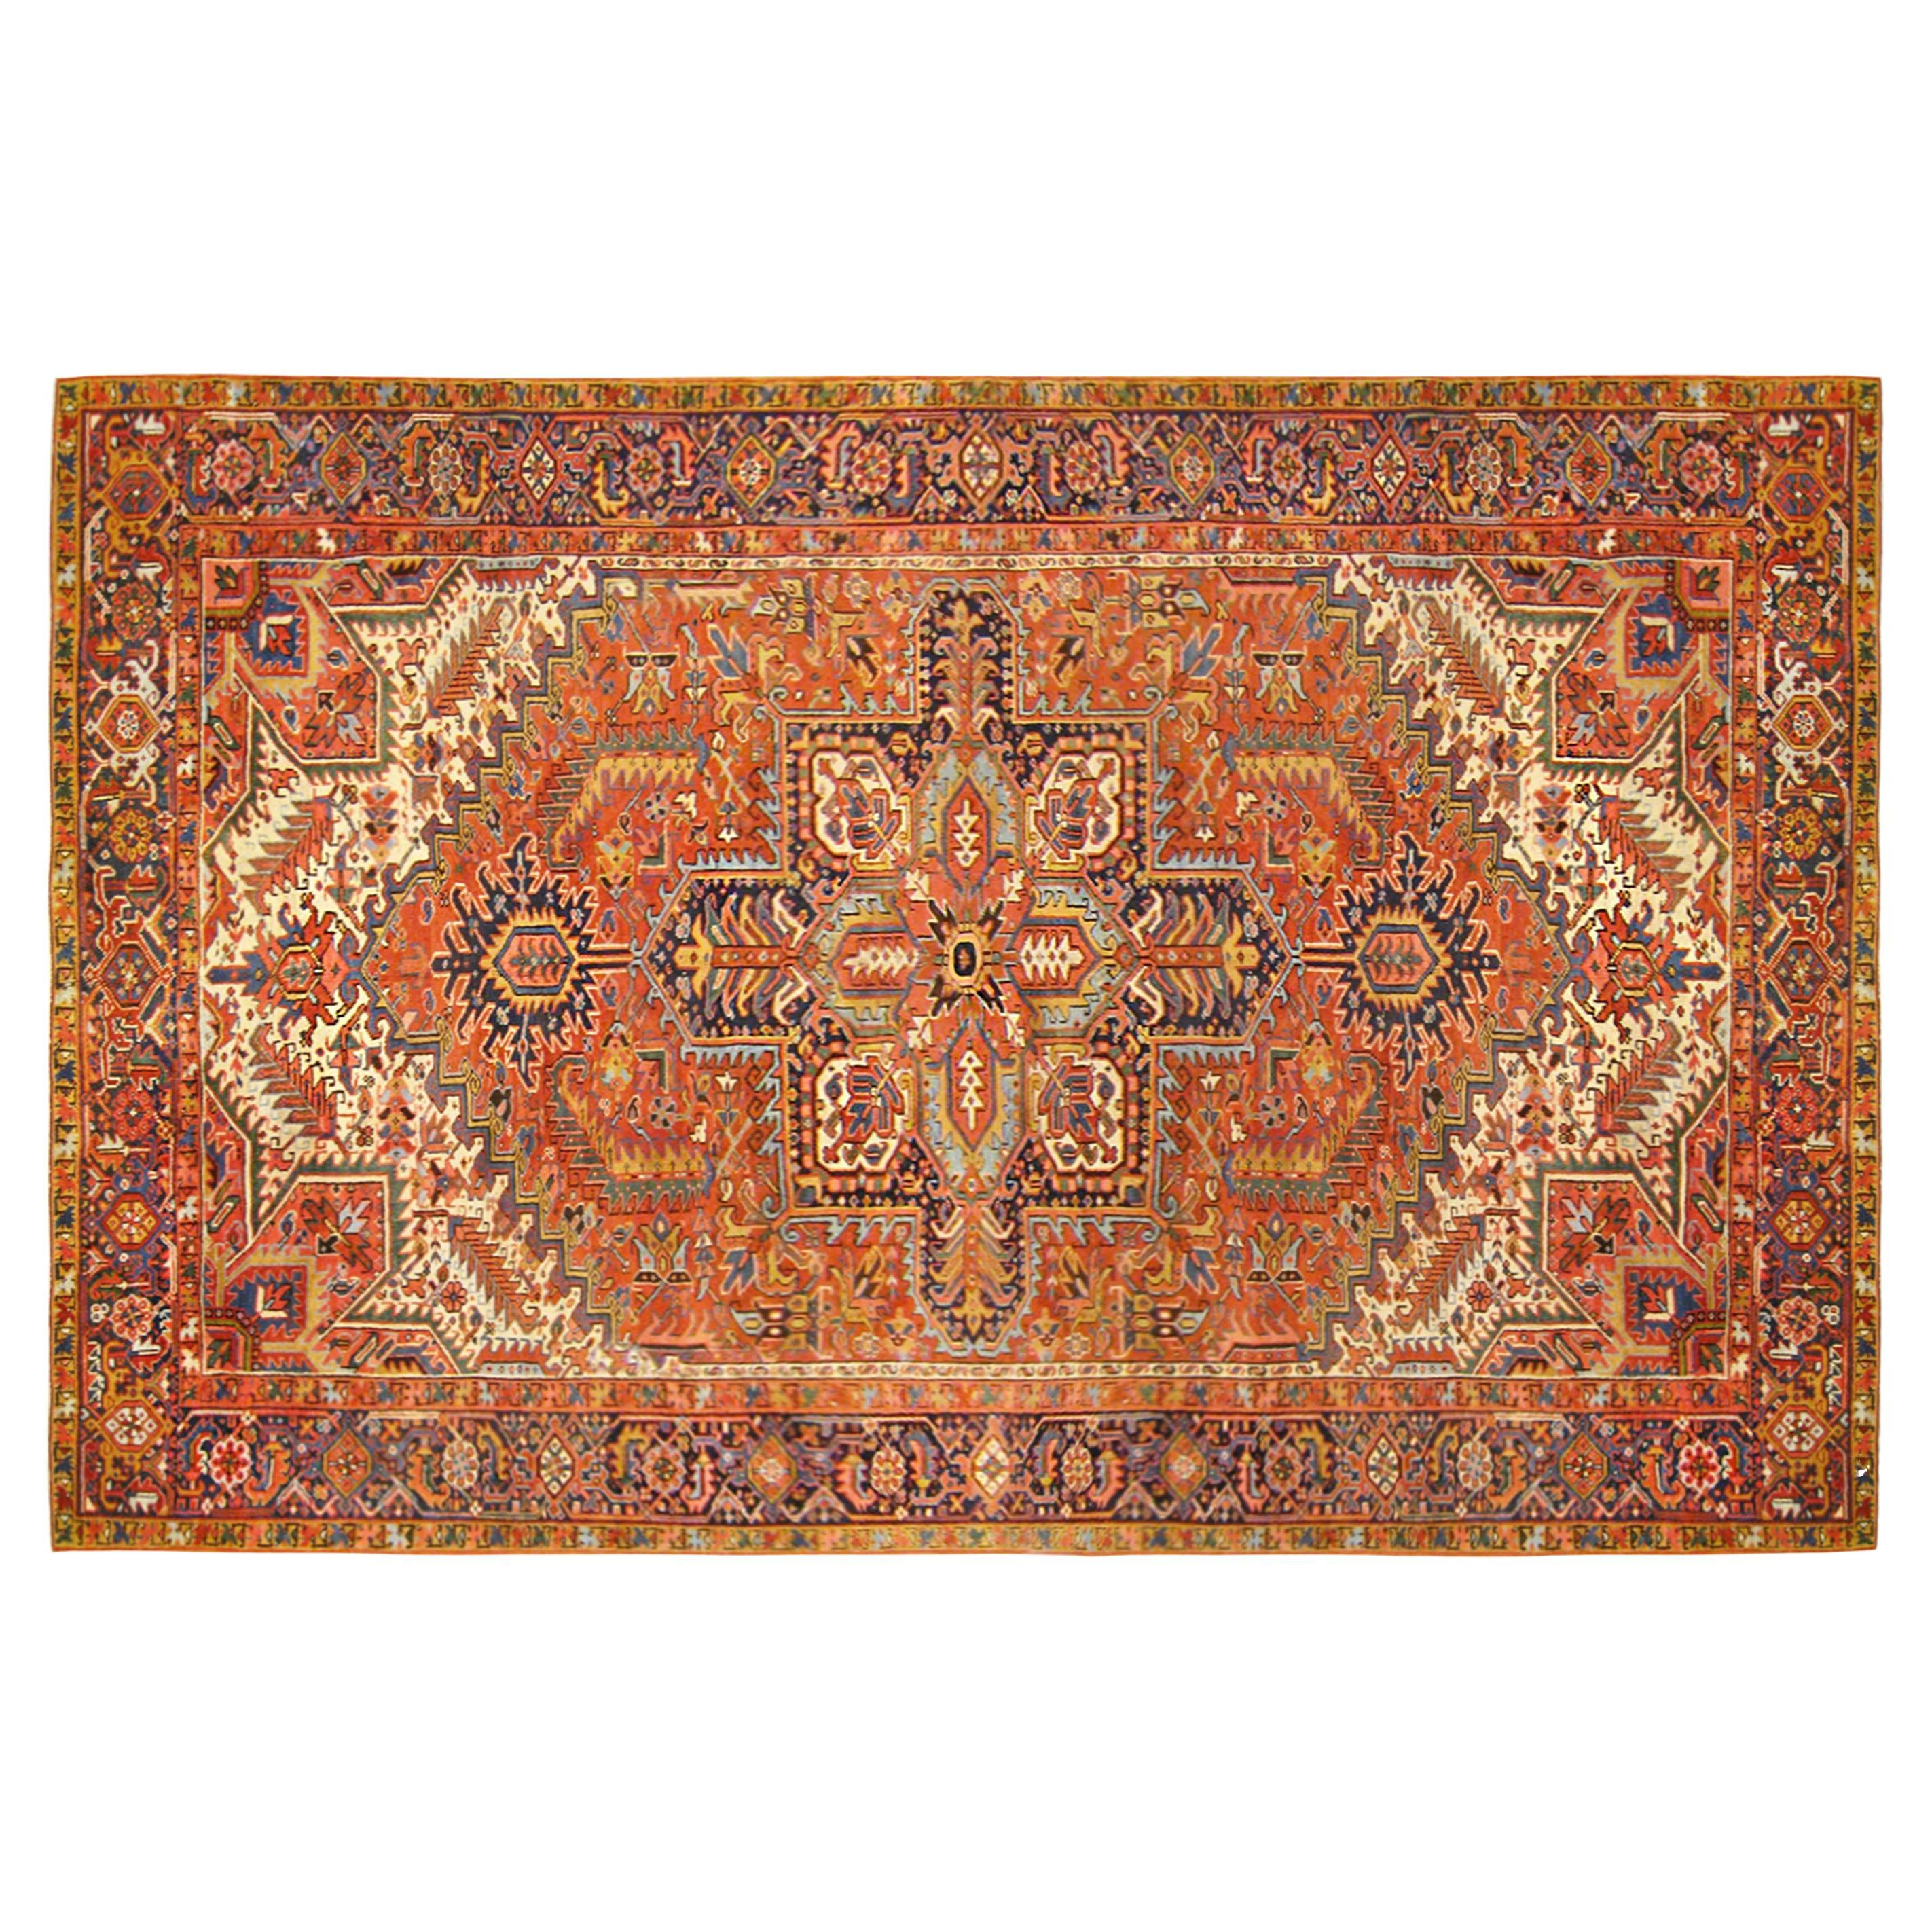 Antique Persian Decorative Oriental Heriz Rug in Room Size For Sale